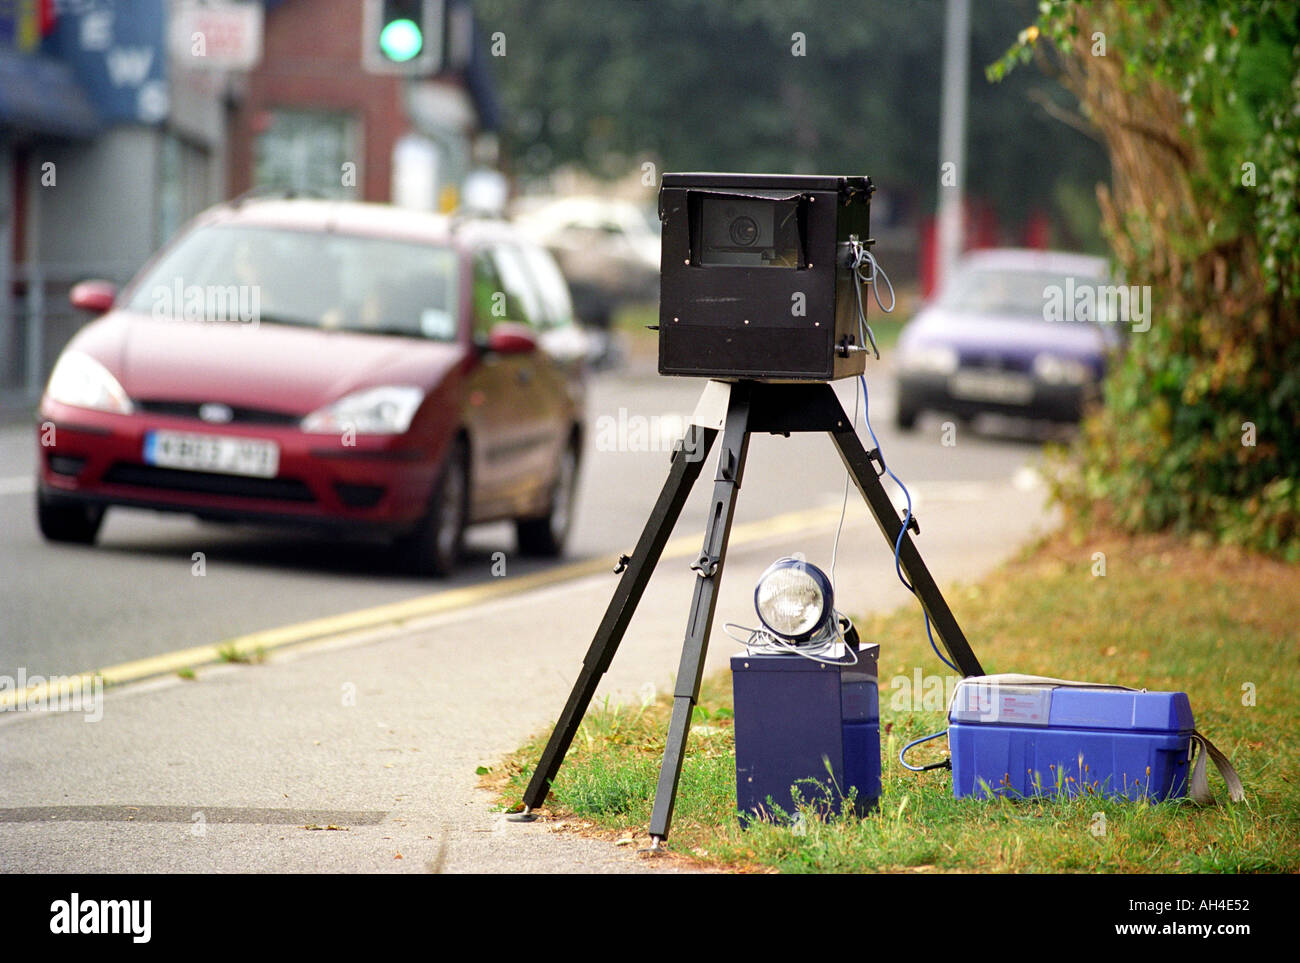 Mobile Police speed camera England UK Stock Photo - Alamy